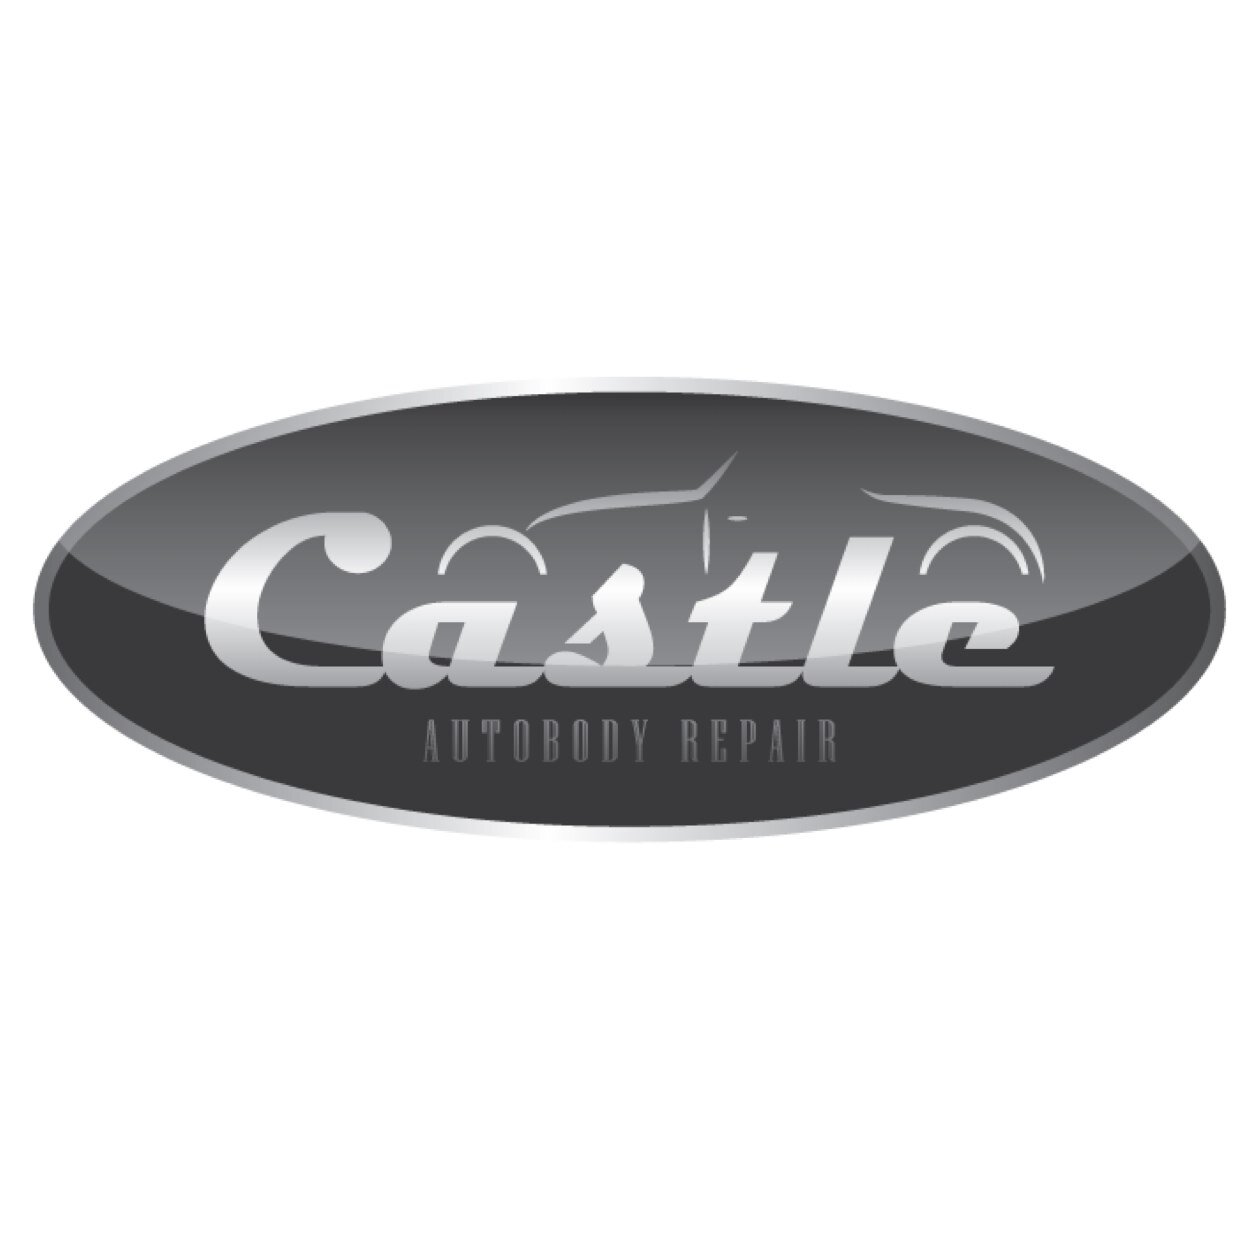 Automotive body repair, restoration and customisation specialists.
Follow us on facebook: Castle Autobody Repair